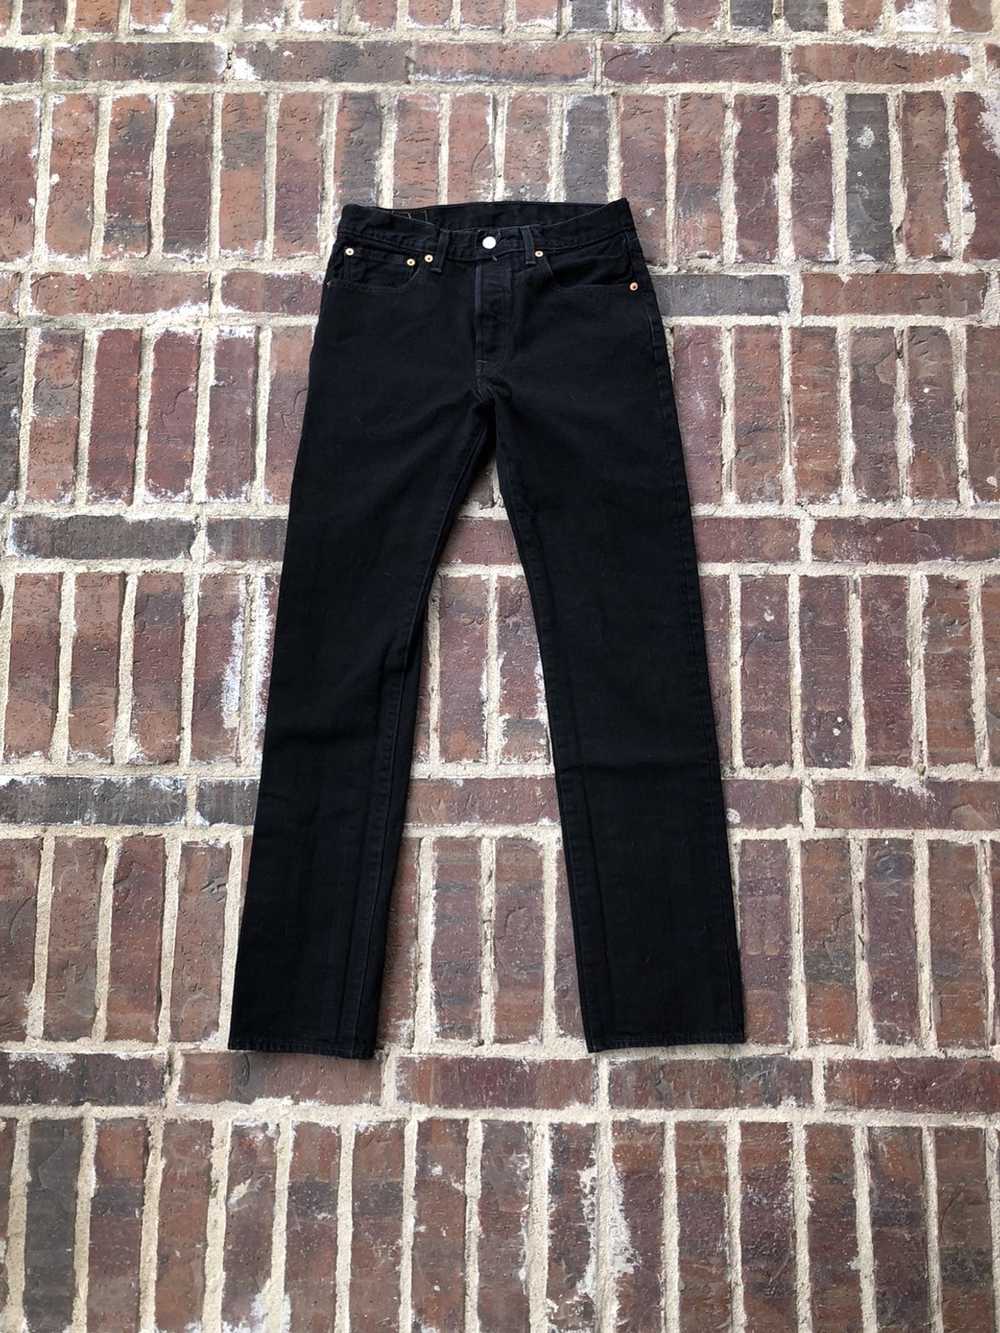 Levi's 501 Black denim jeans 31x34 - image 1